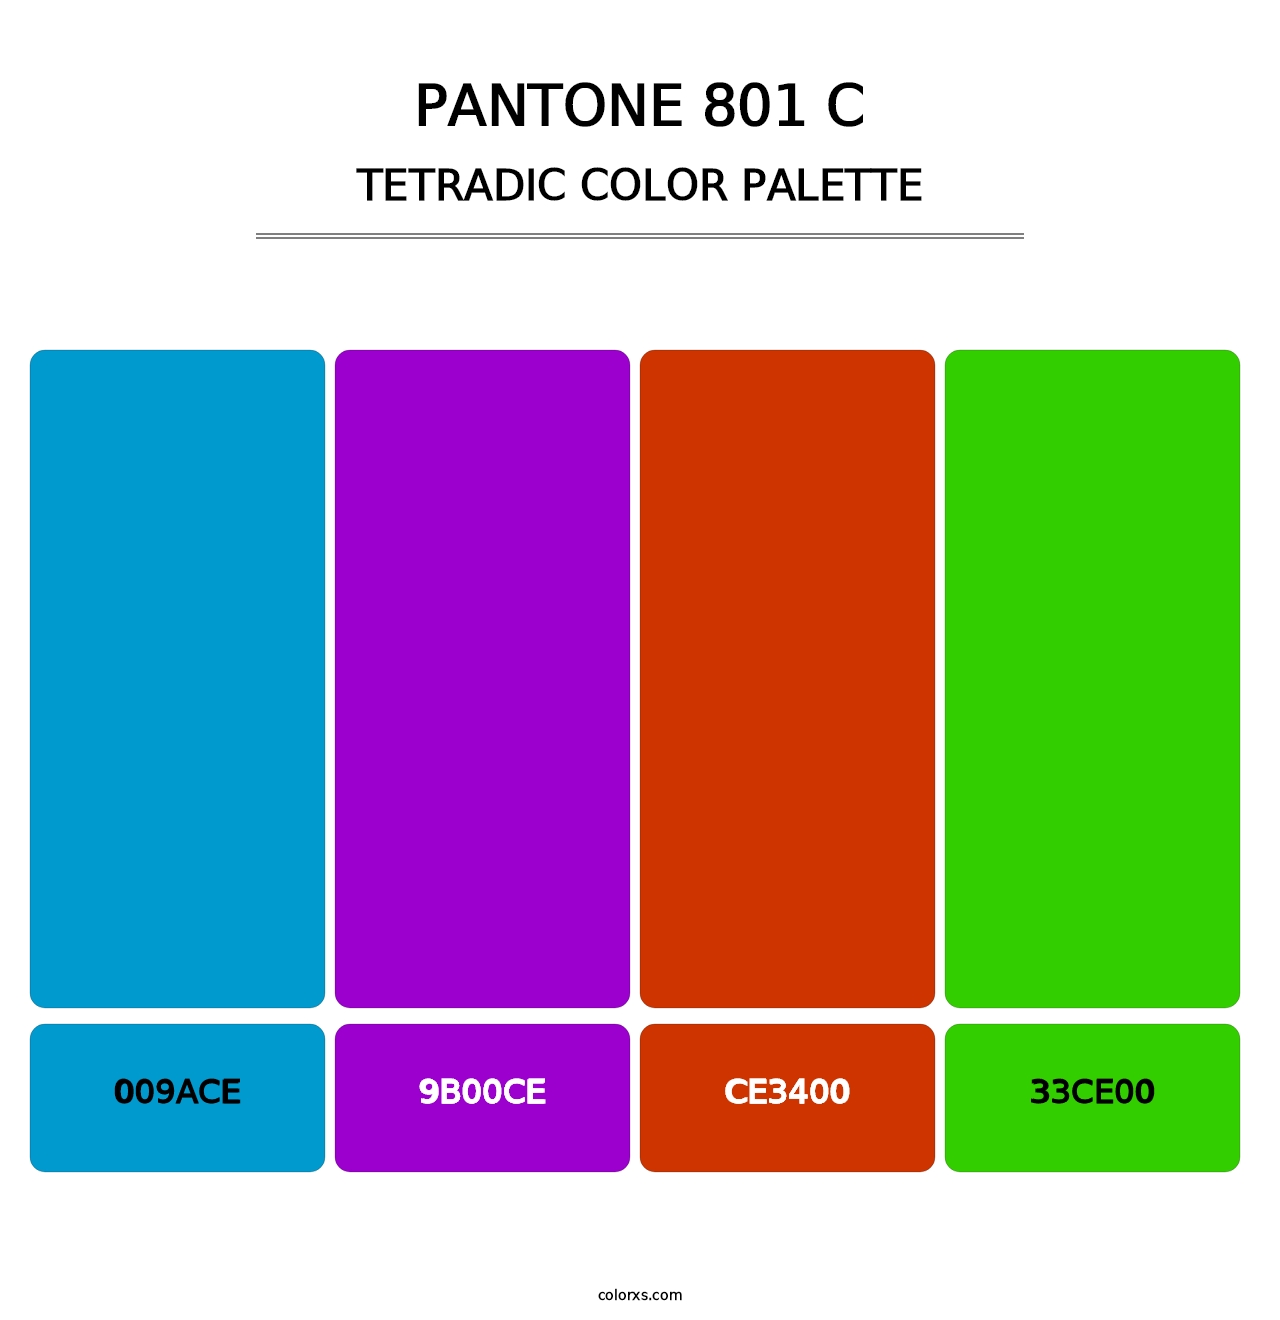 PANTONE 801 C - Tetradic Color Palette